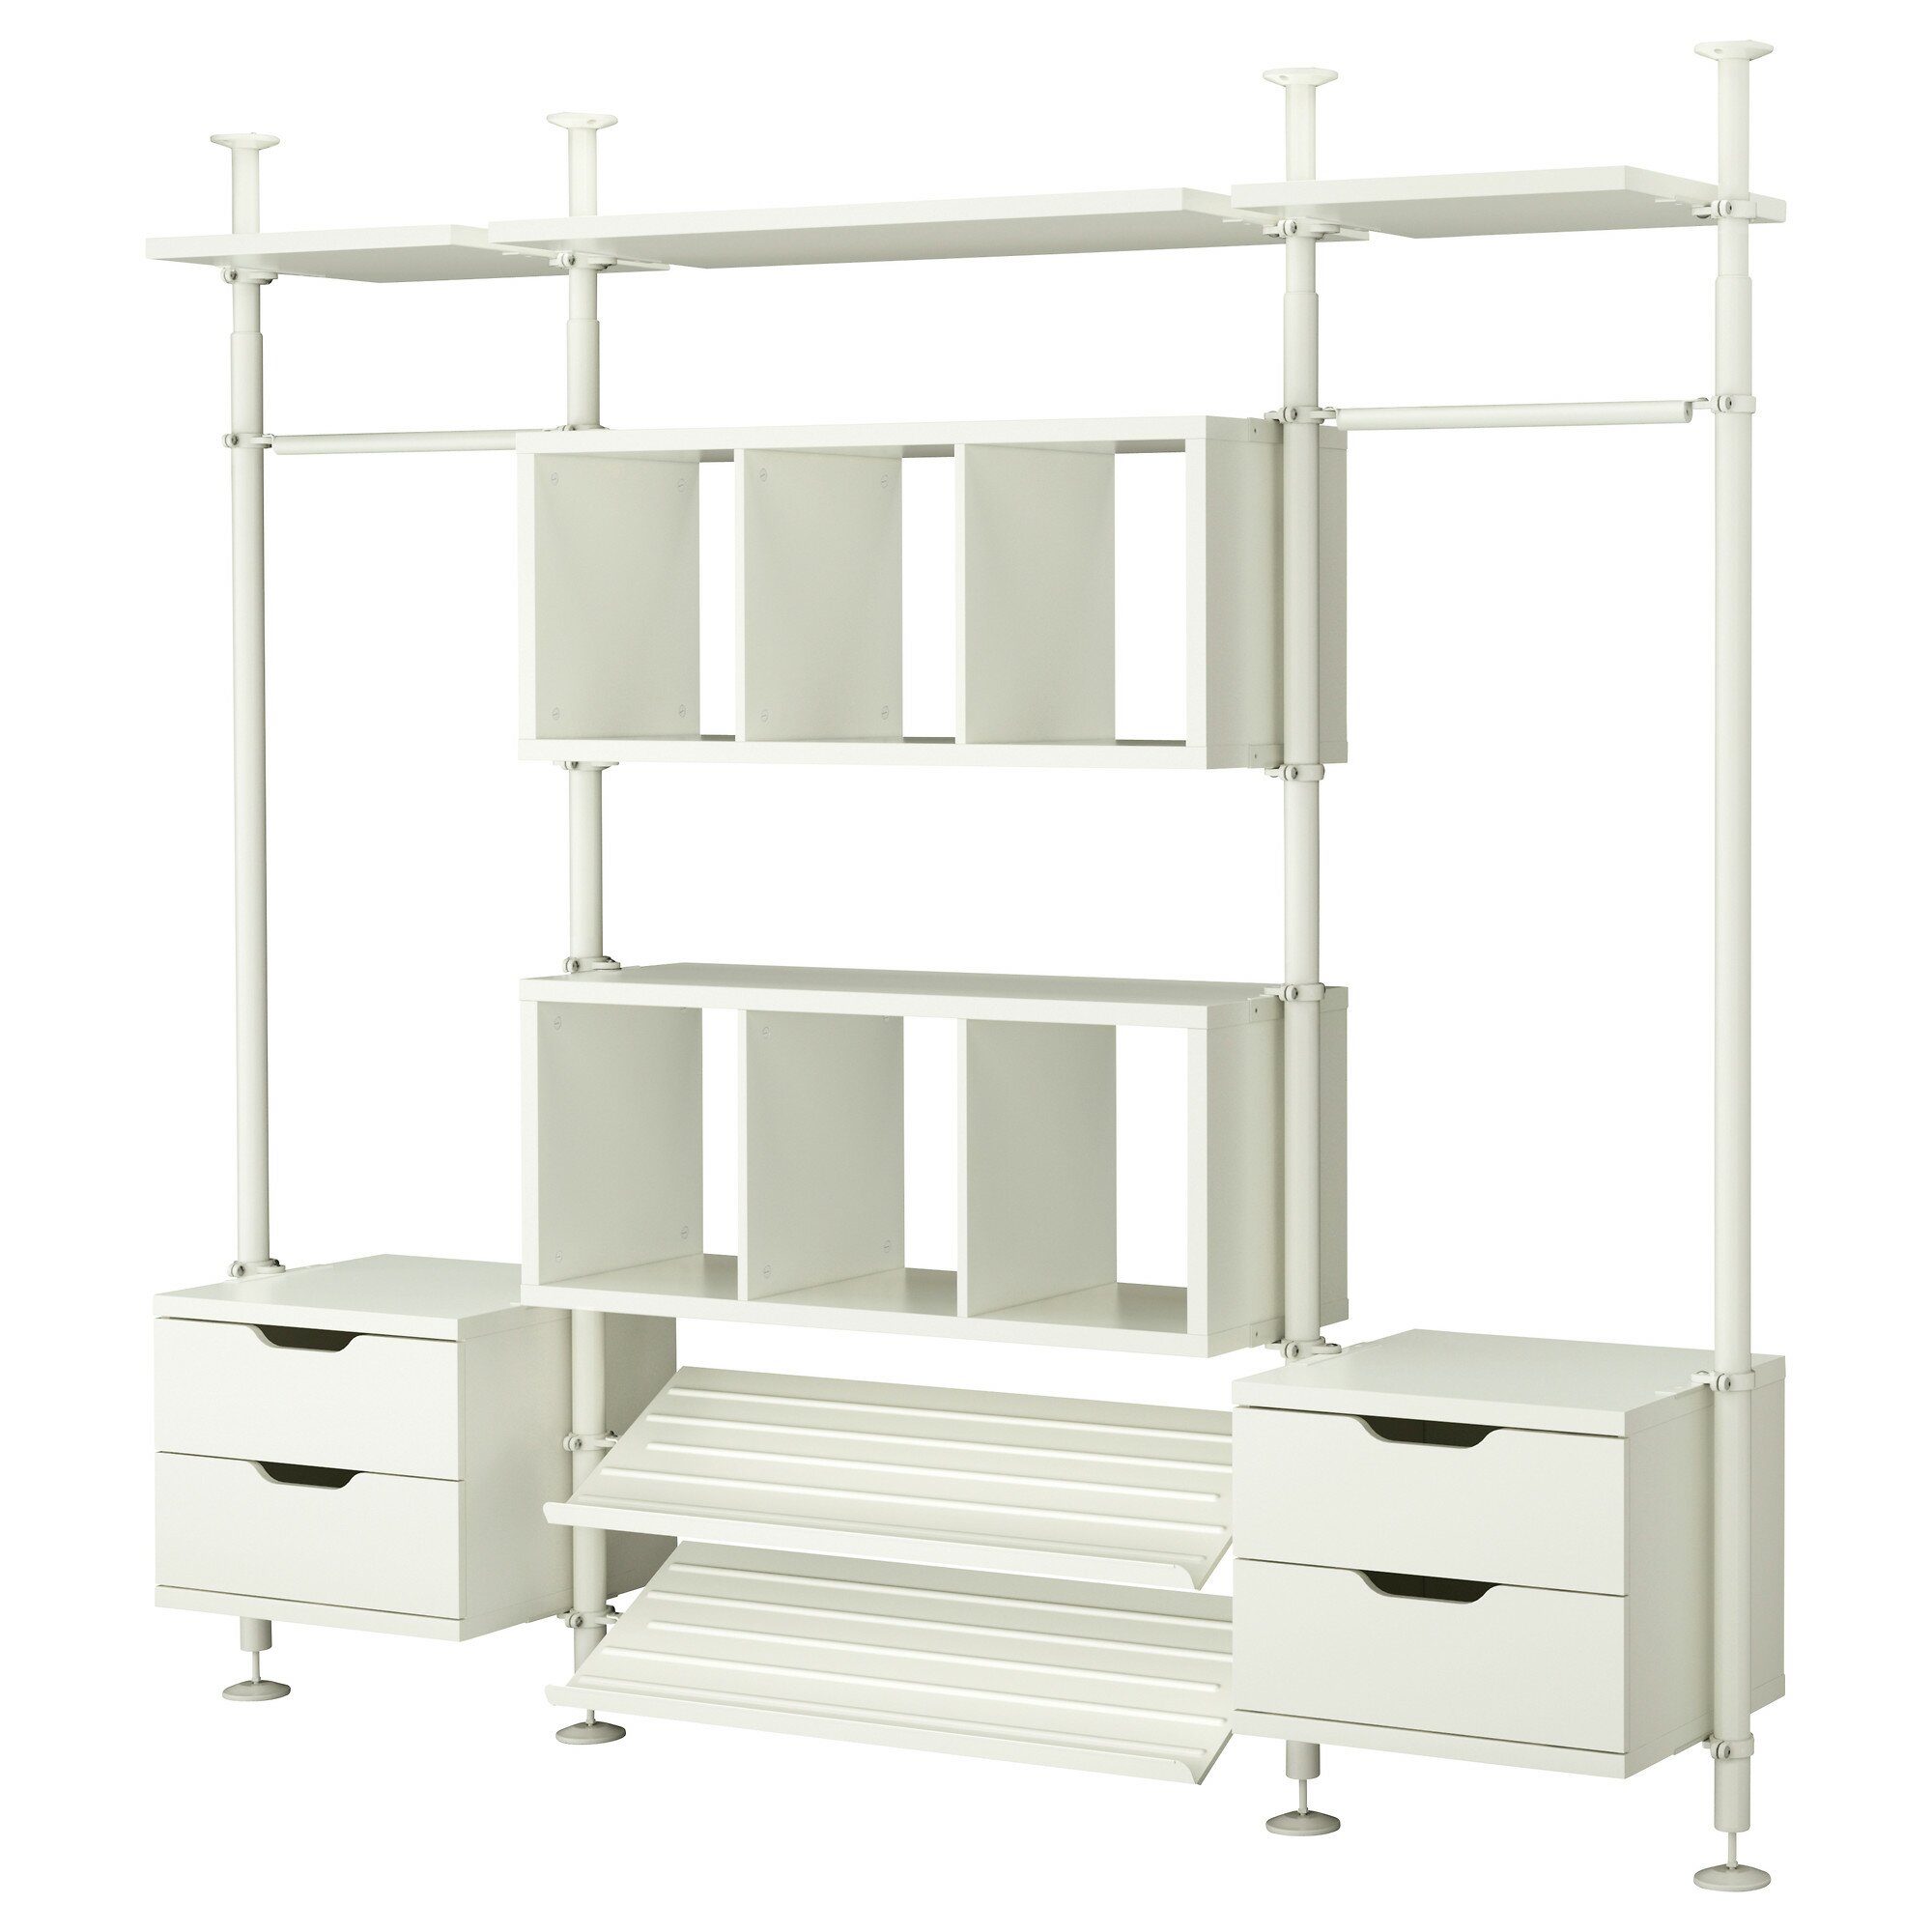 Ikea Closet Storage for Your Clothes Storage Design Ideas: Ikea Closets Organizers | Ikea Closet Storage | Standing Closet Ikea